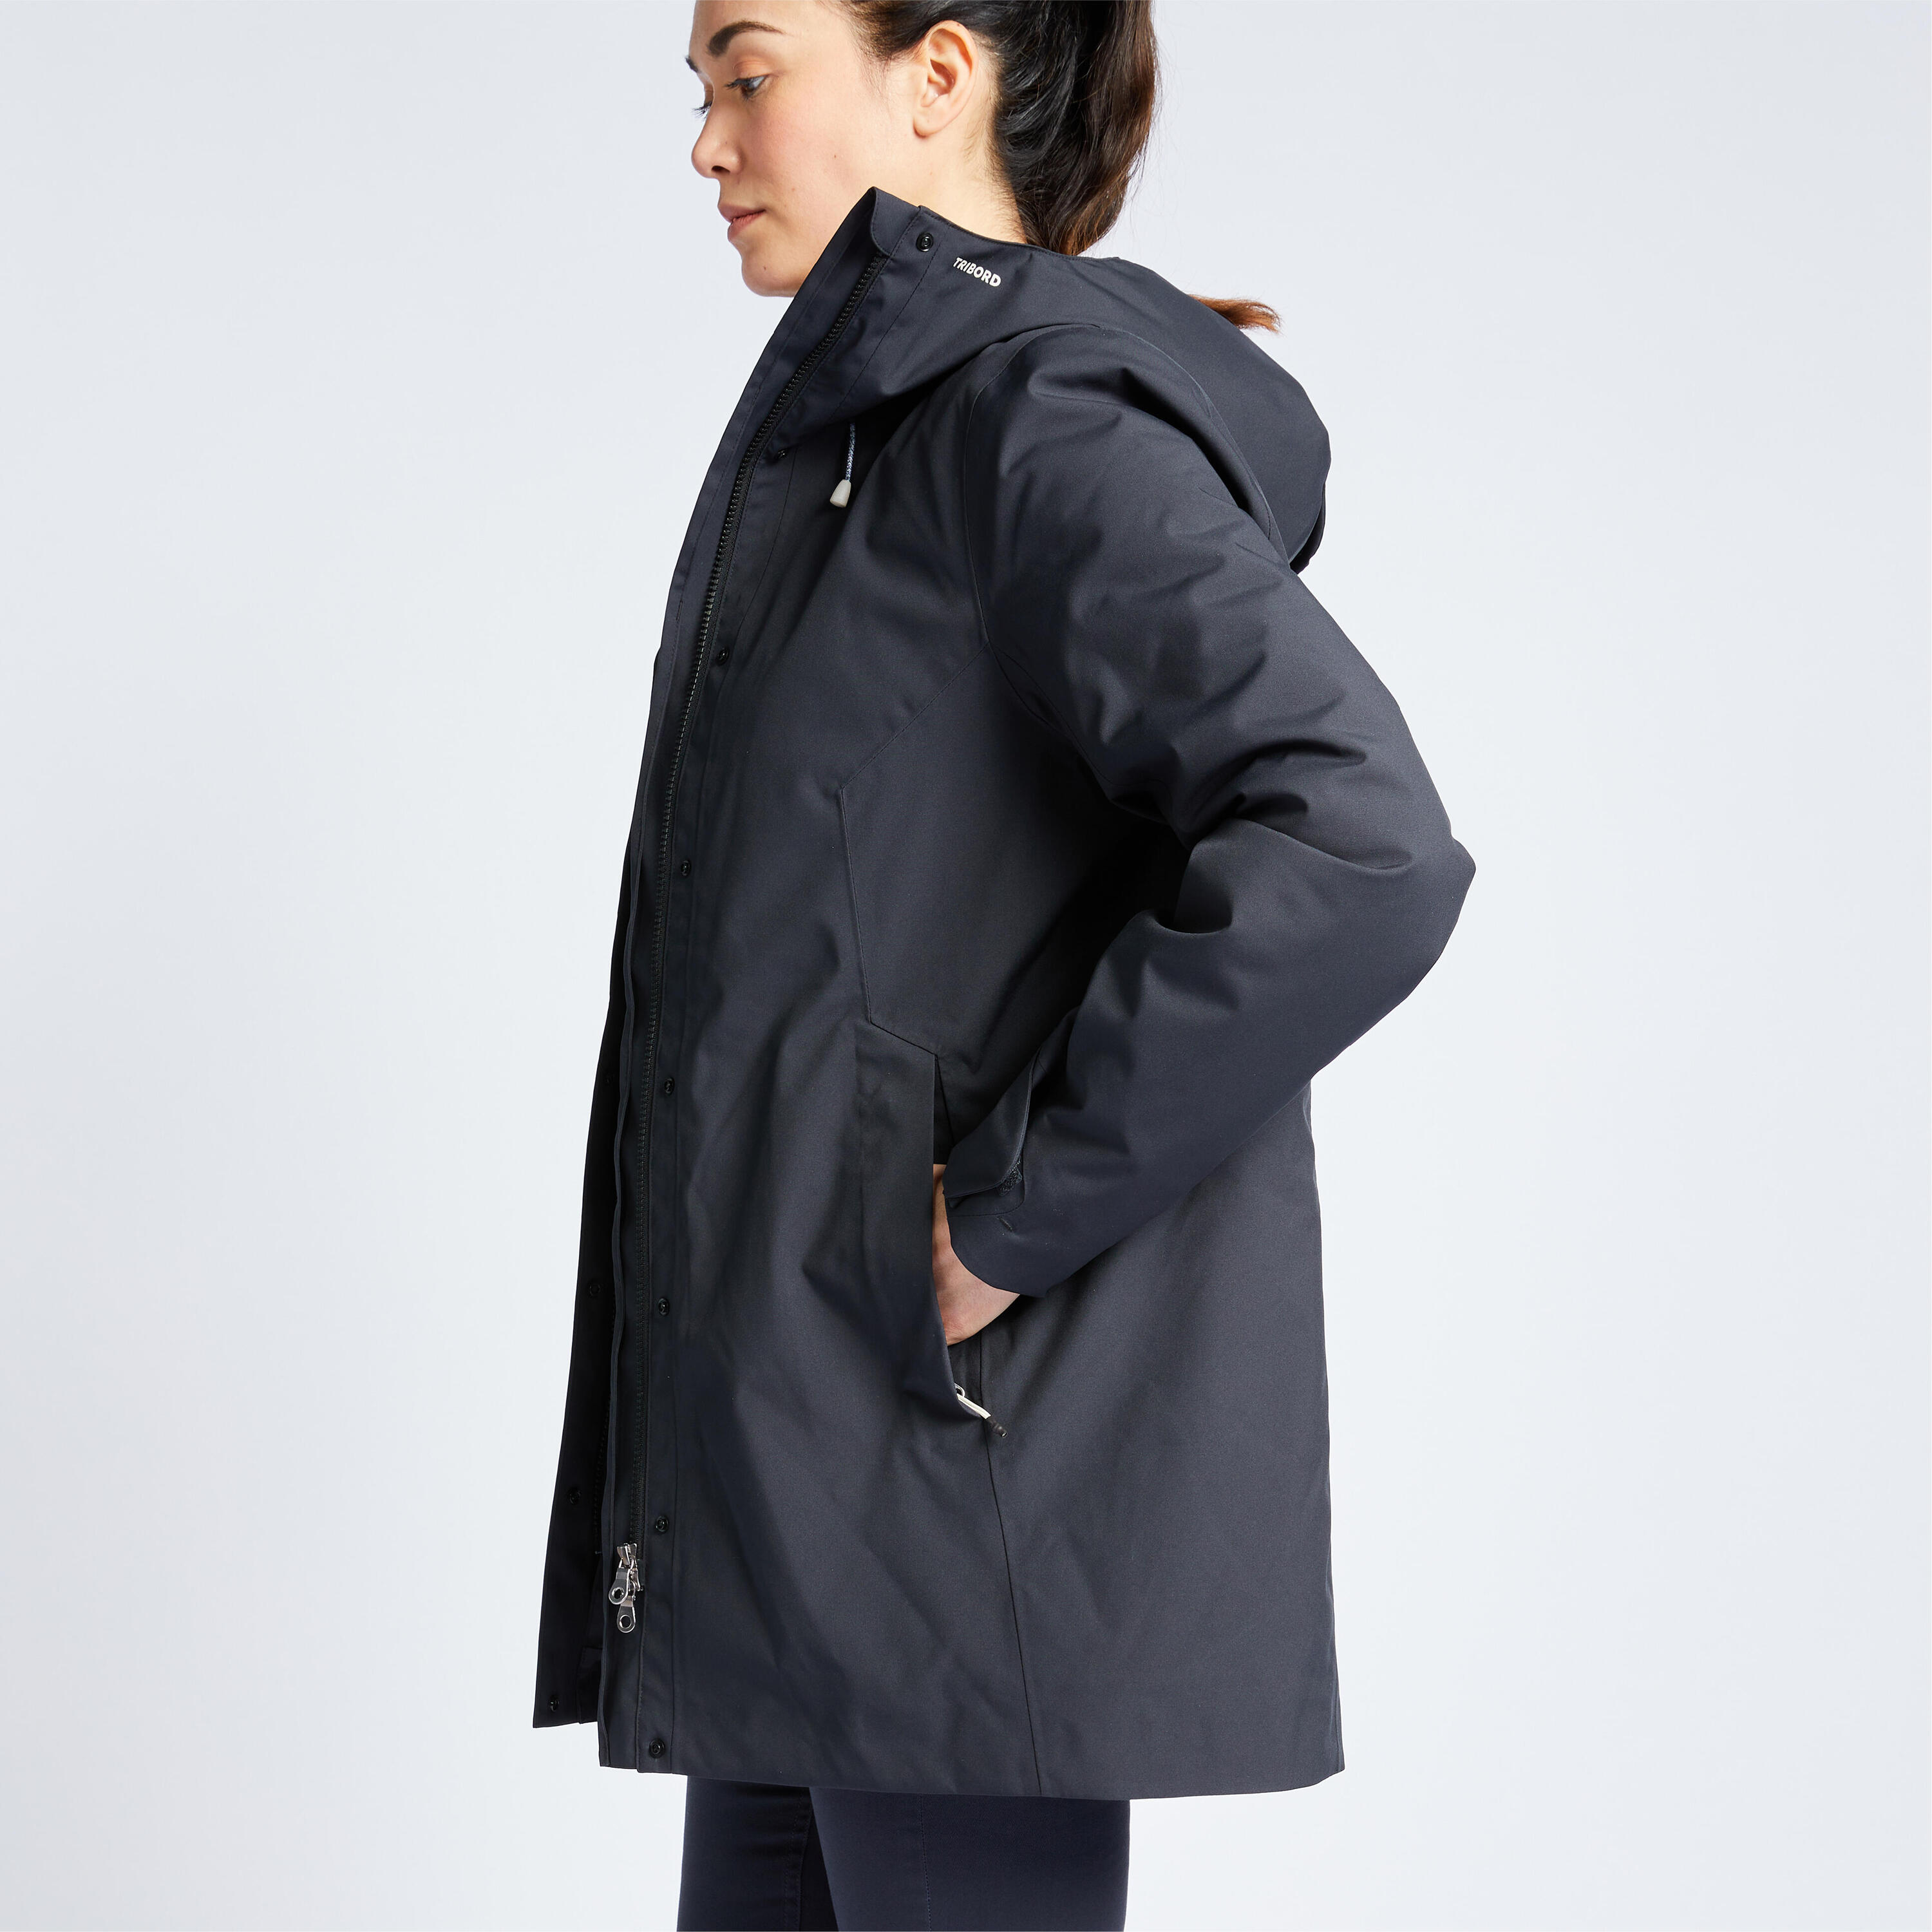 Women's Warm Waterproof Windproof Jacket SAILING 300 - Dark grey 3/13